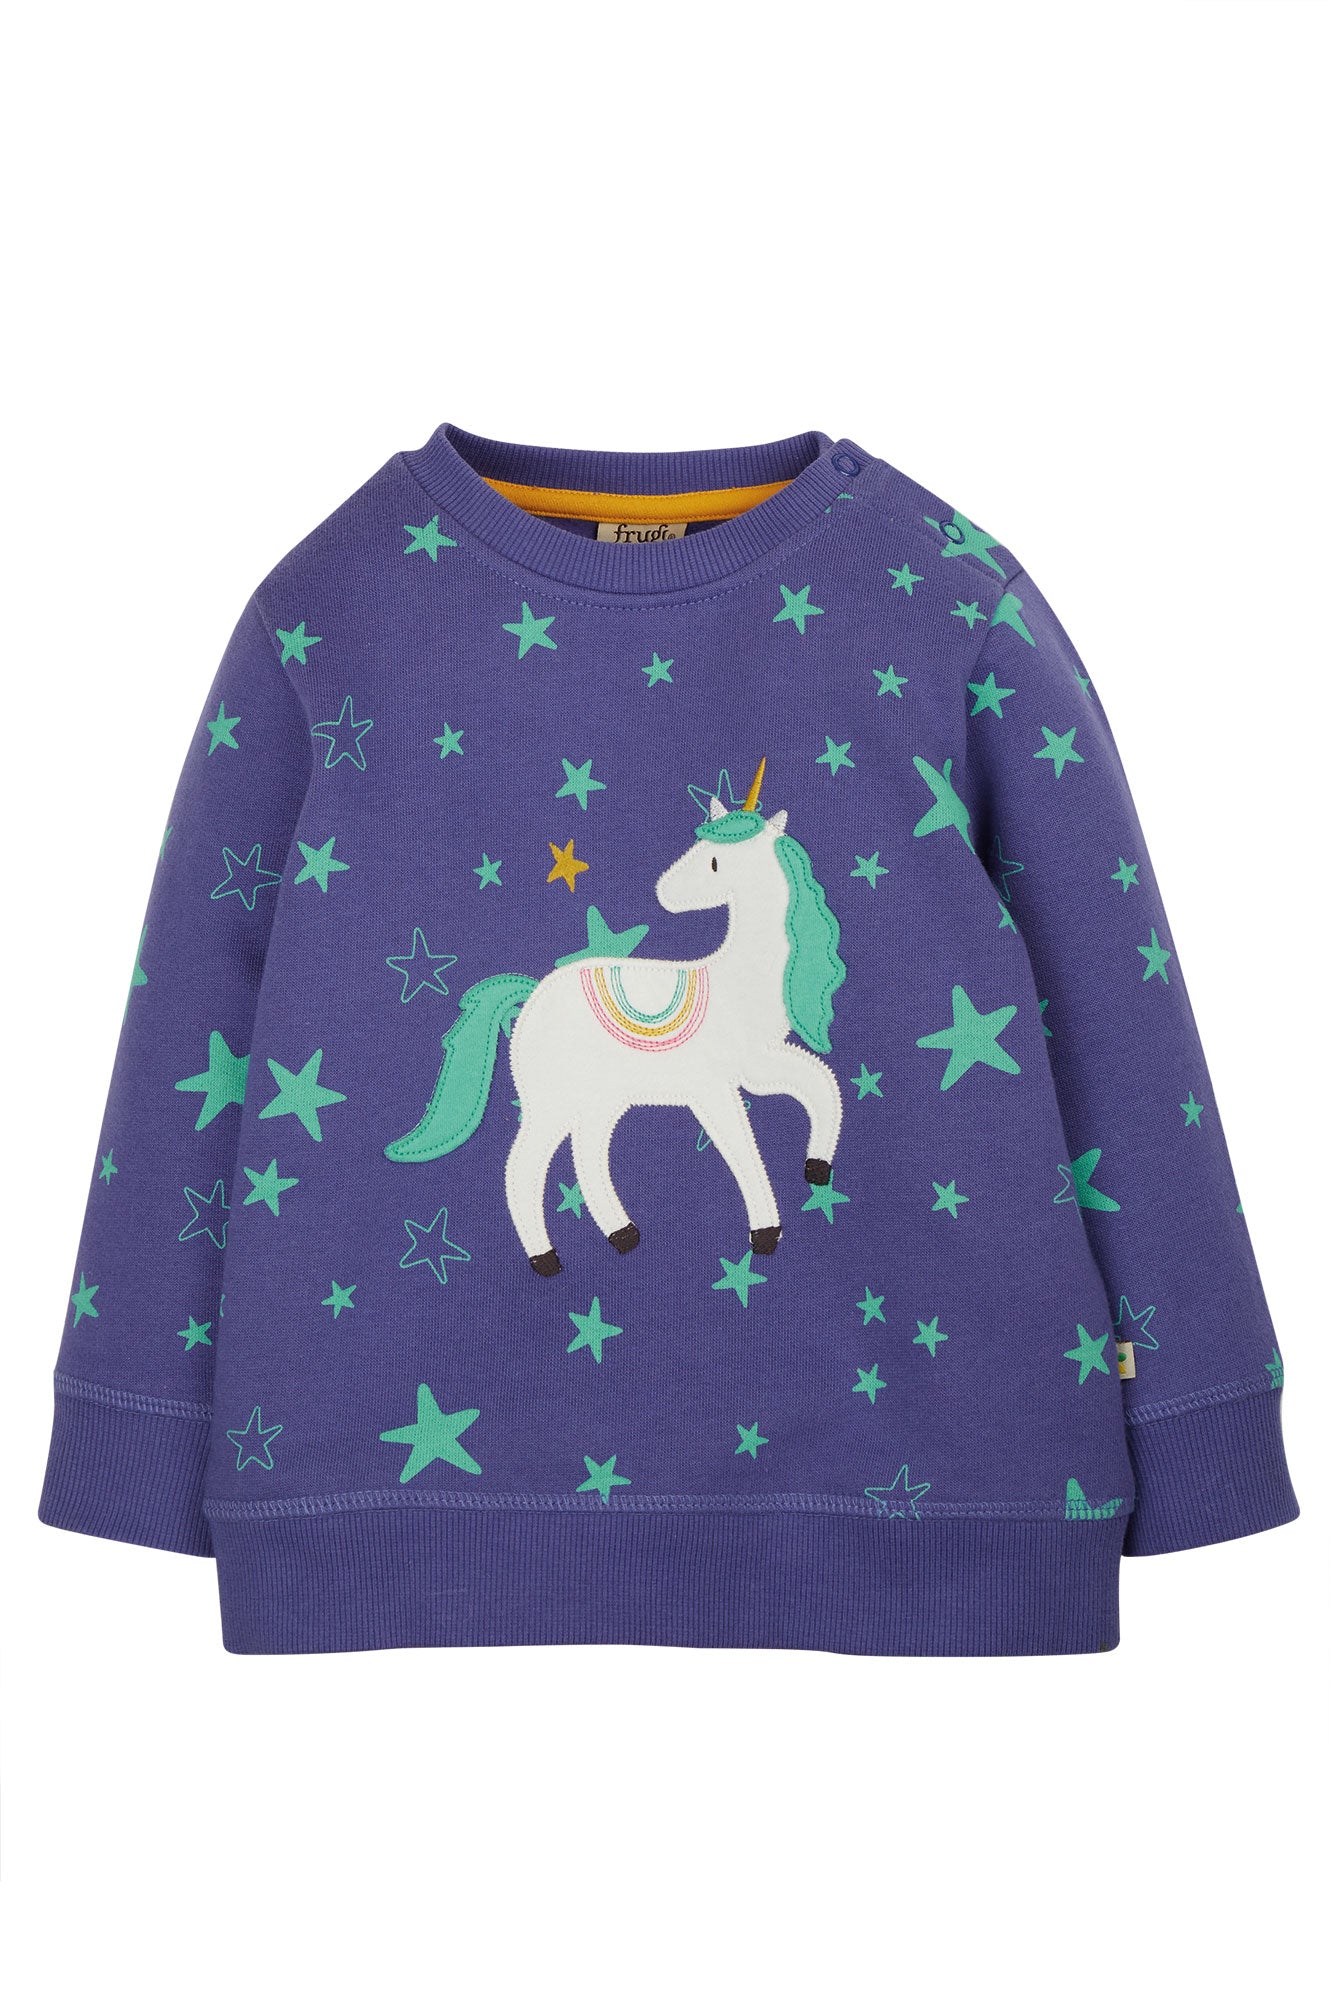 Frugi - Sammy – Cosmic Star - Unicorn Heldenkind Mussel Sweatshirt